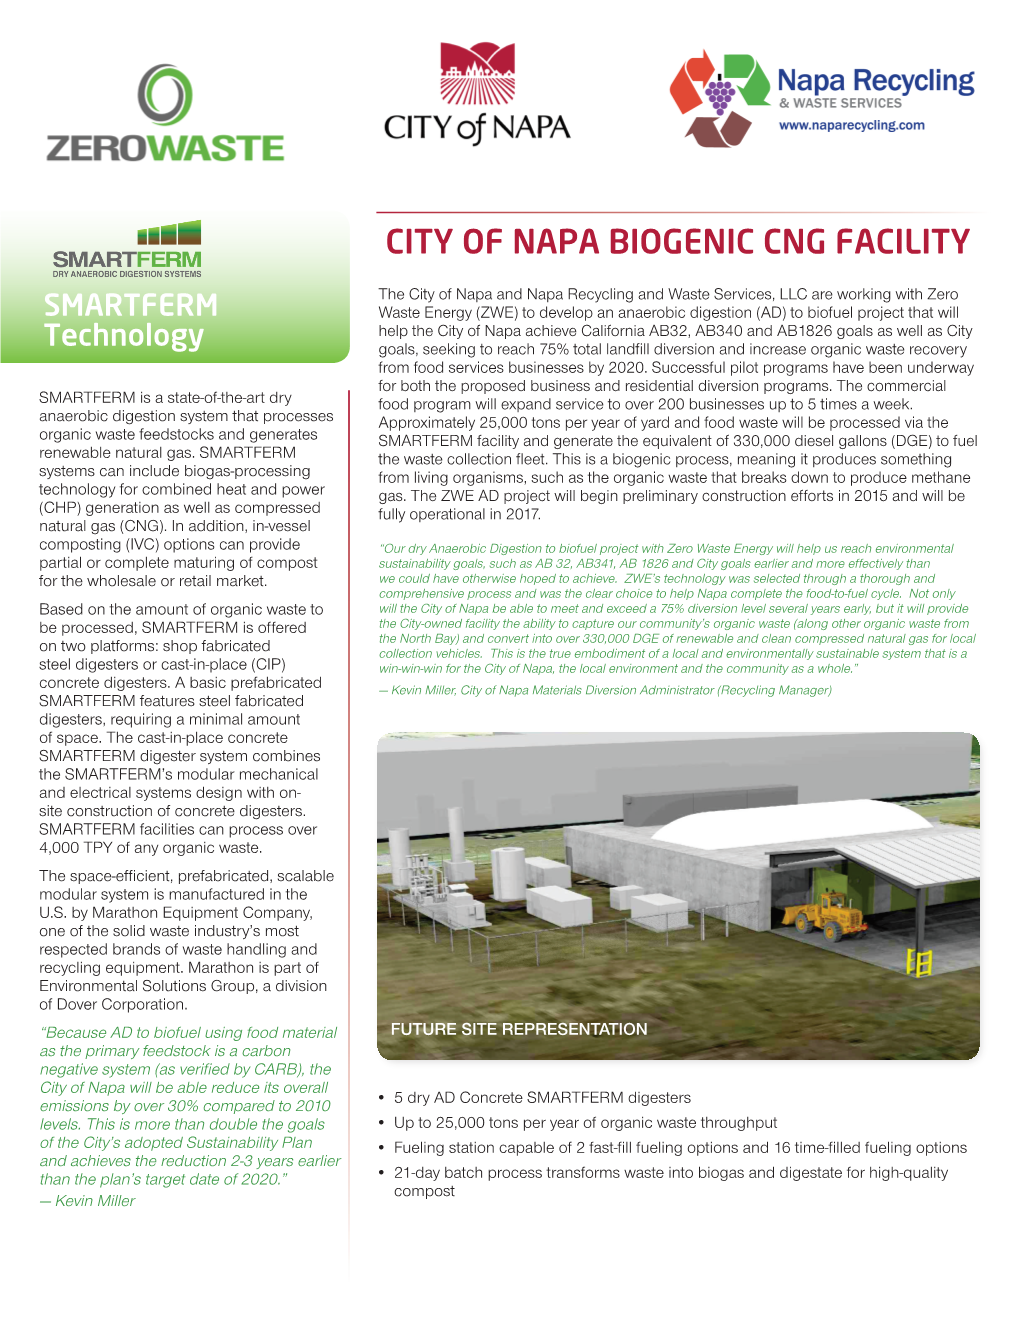 City of Napa Biogenic Cng Facility